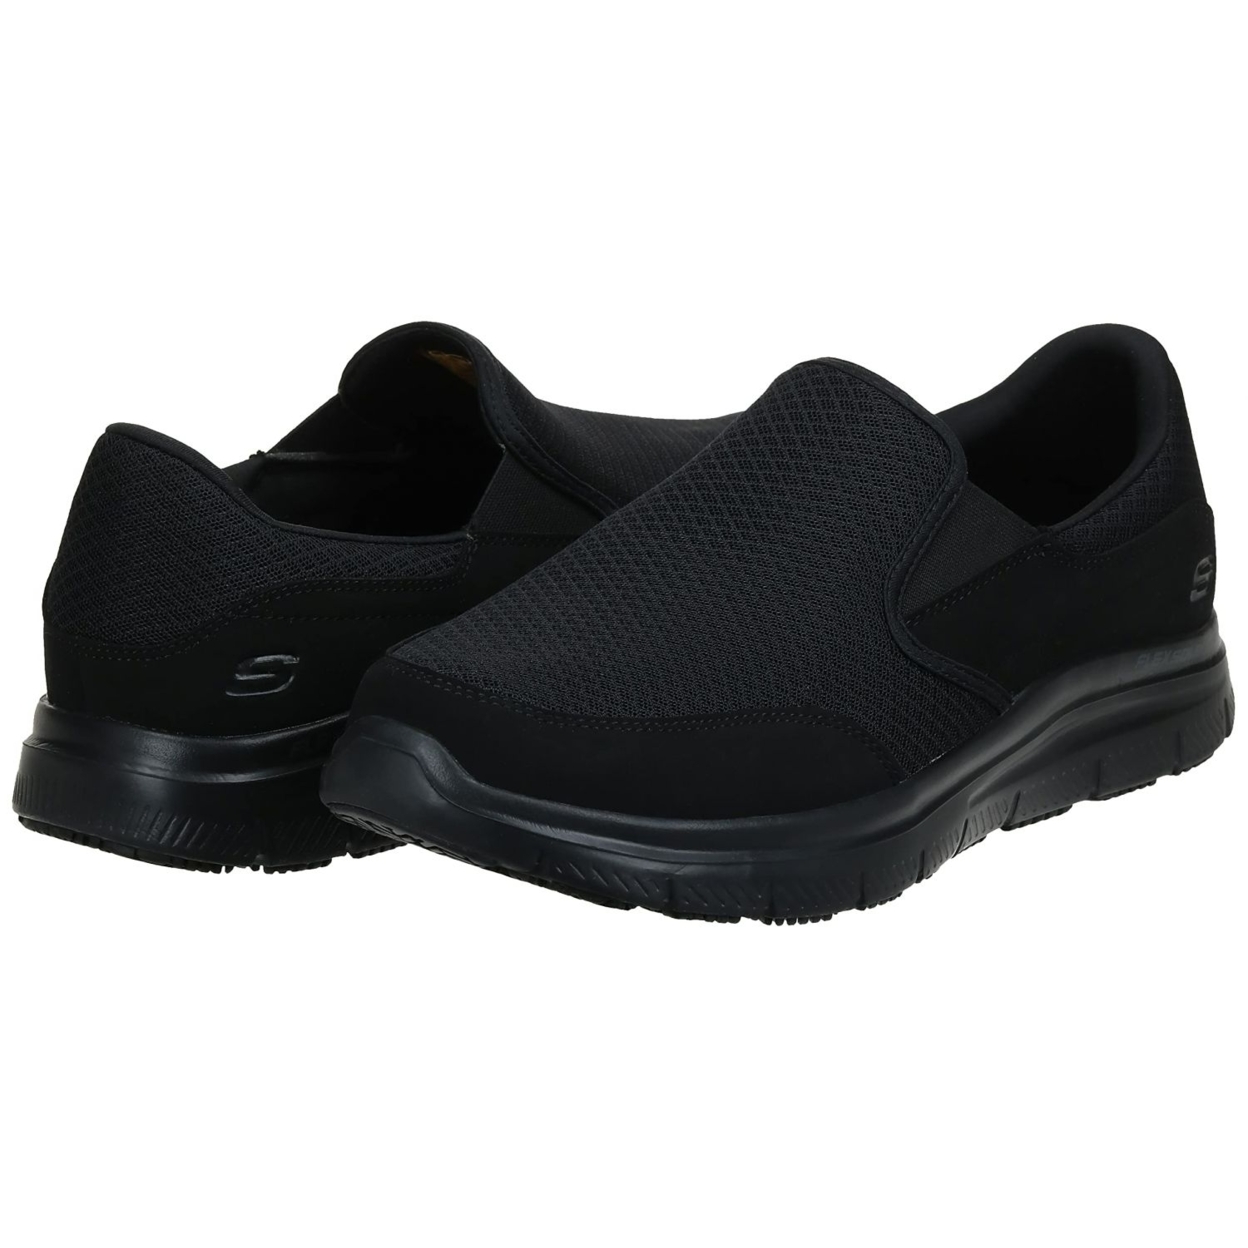 Skechers For Work Men's Flex Advantage Mcallen Food Service Shoe ONE SIZE BLACK - BLACK, 8 Wide